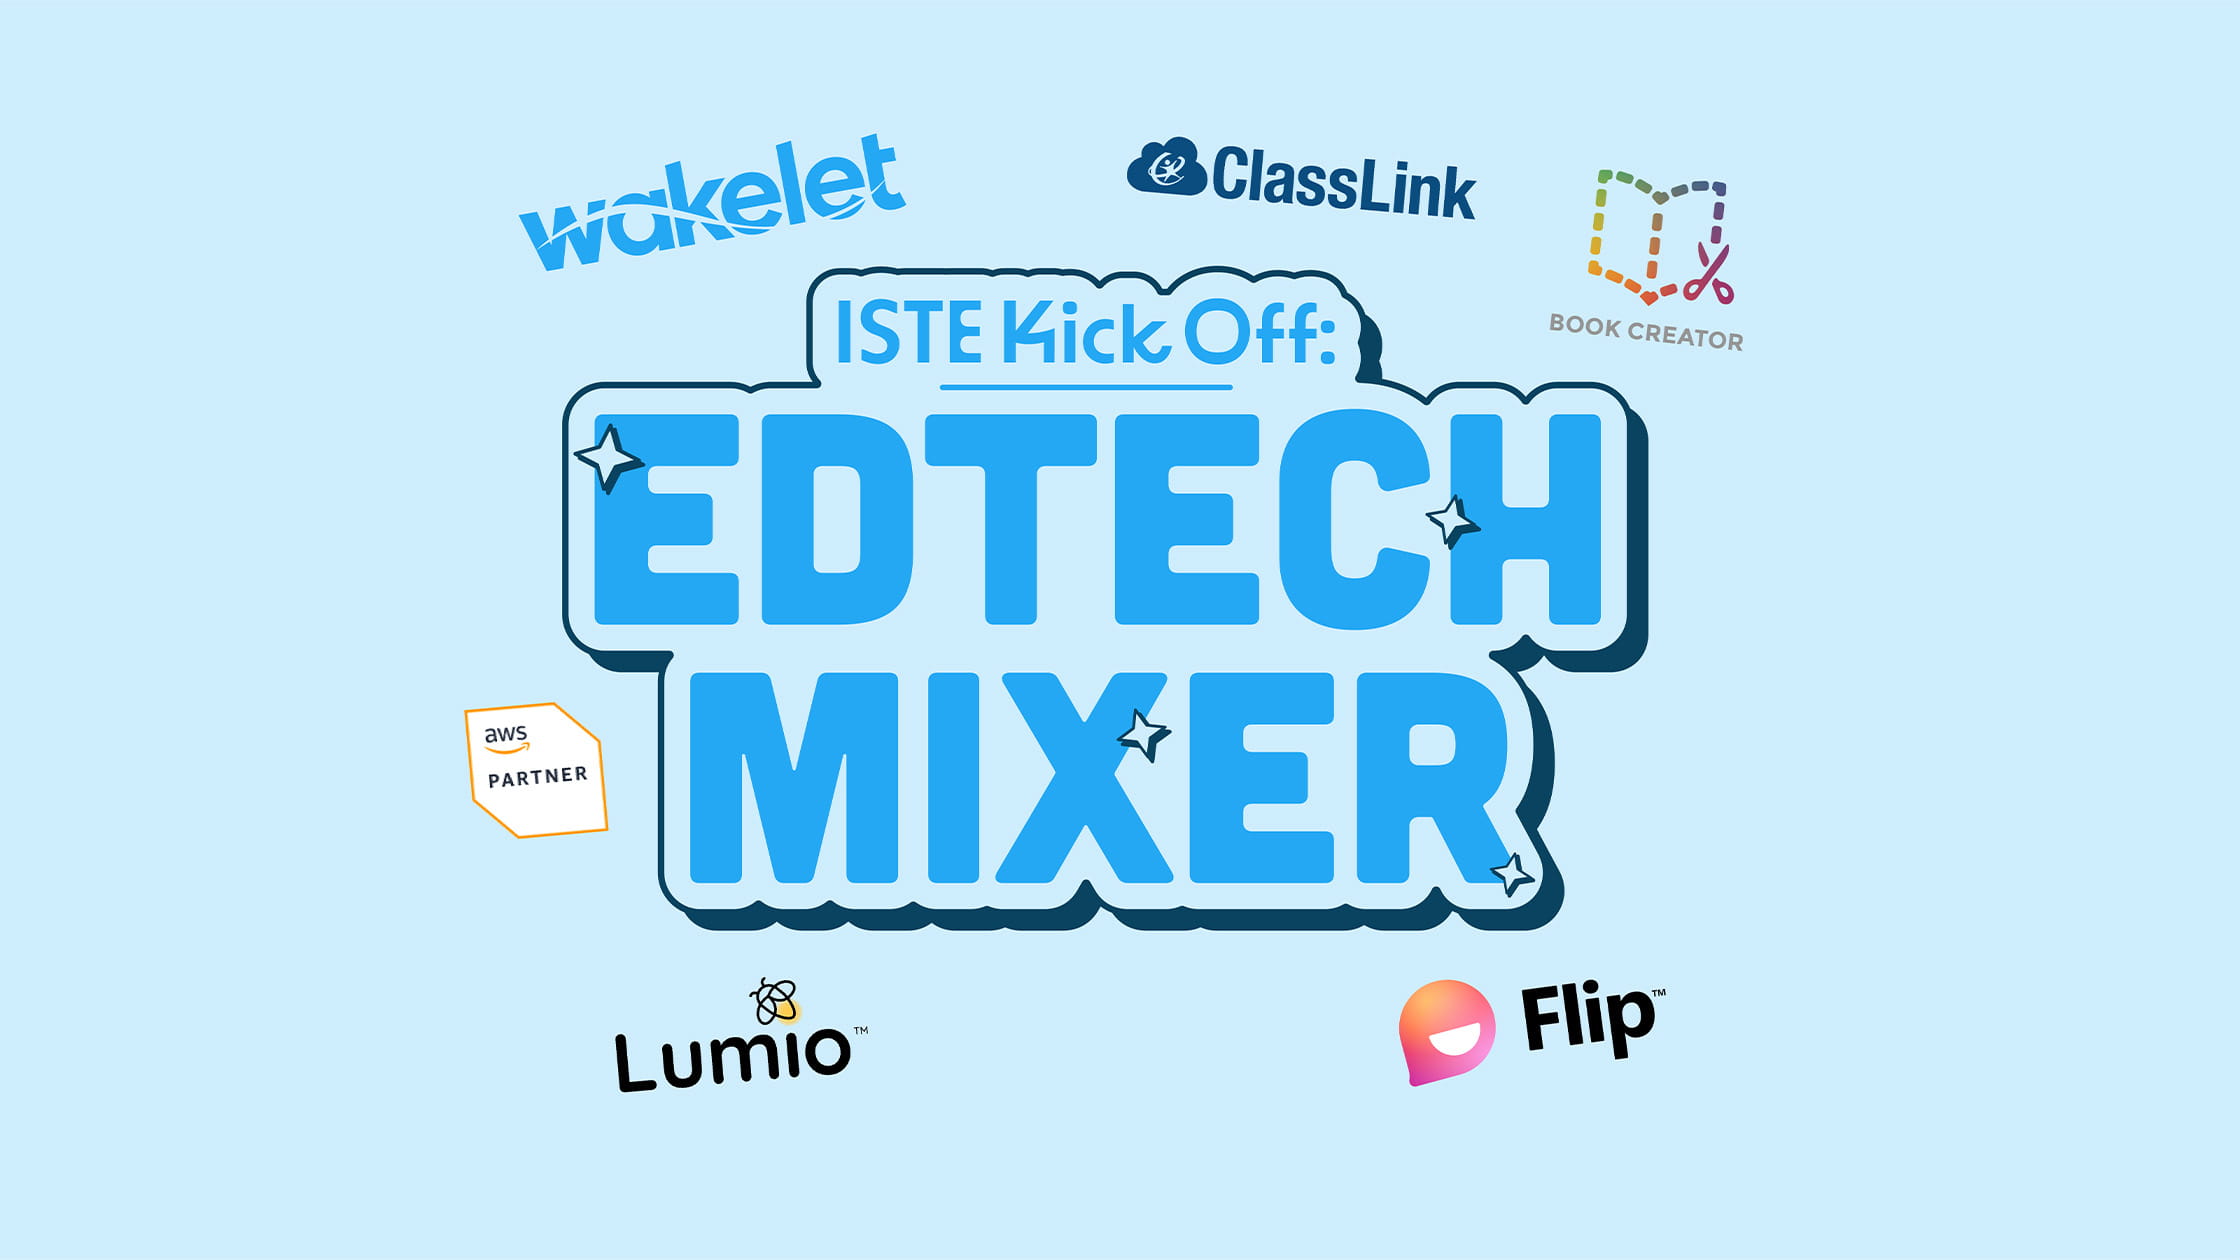 ISTE KickOff EdTech Mixer graphic.